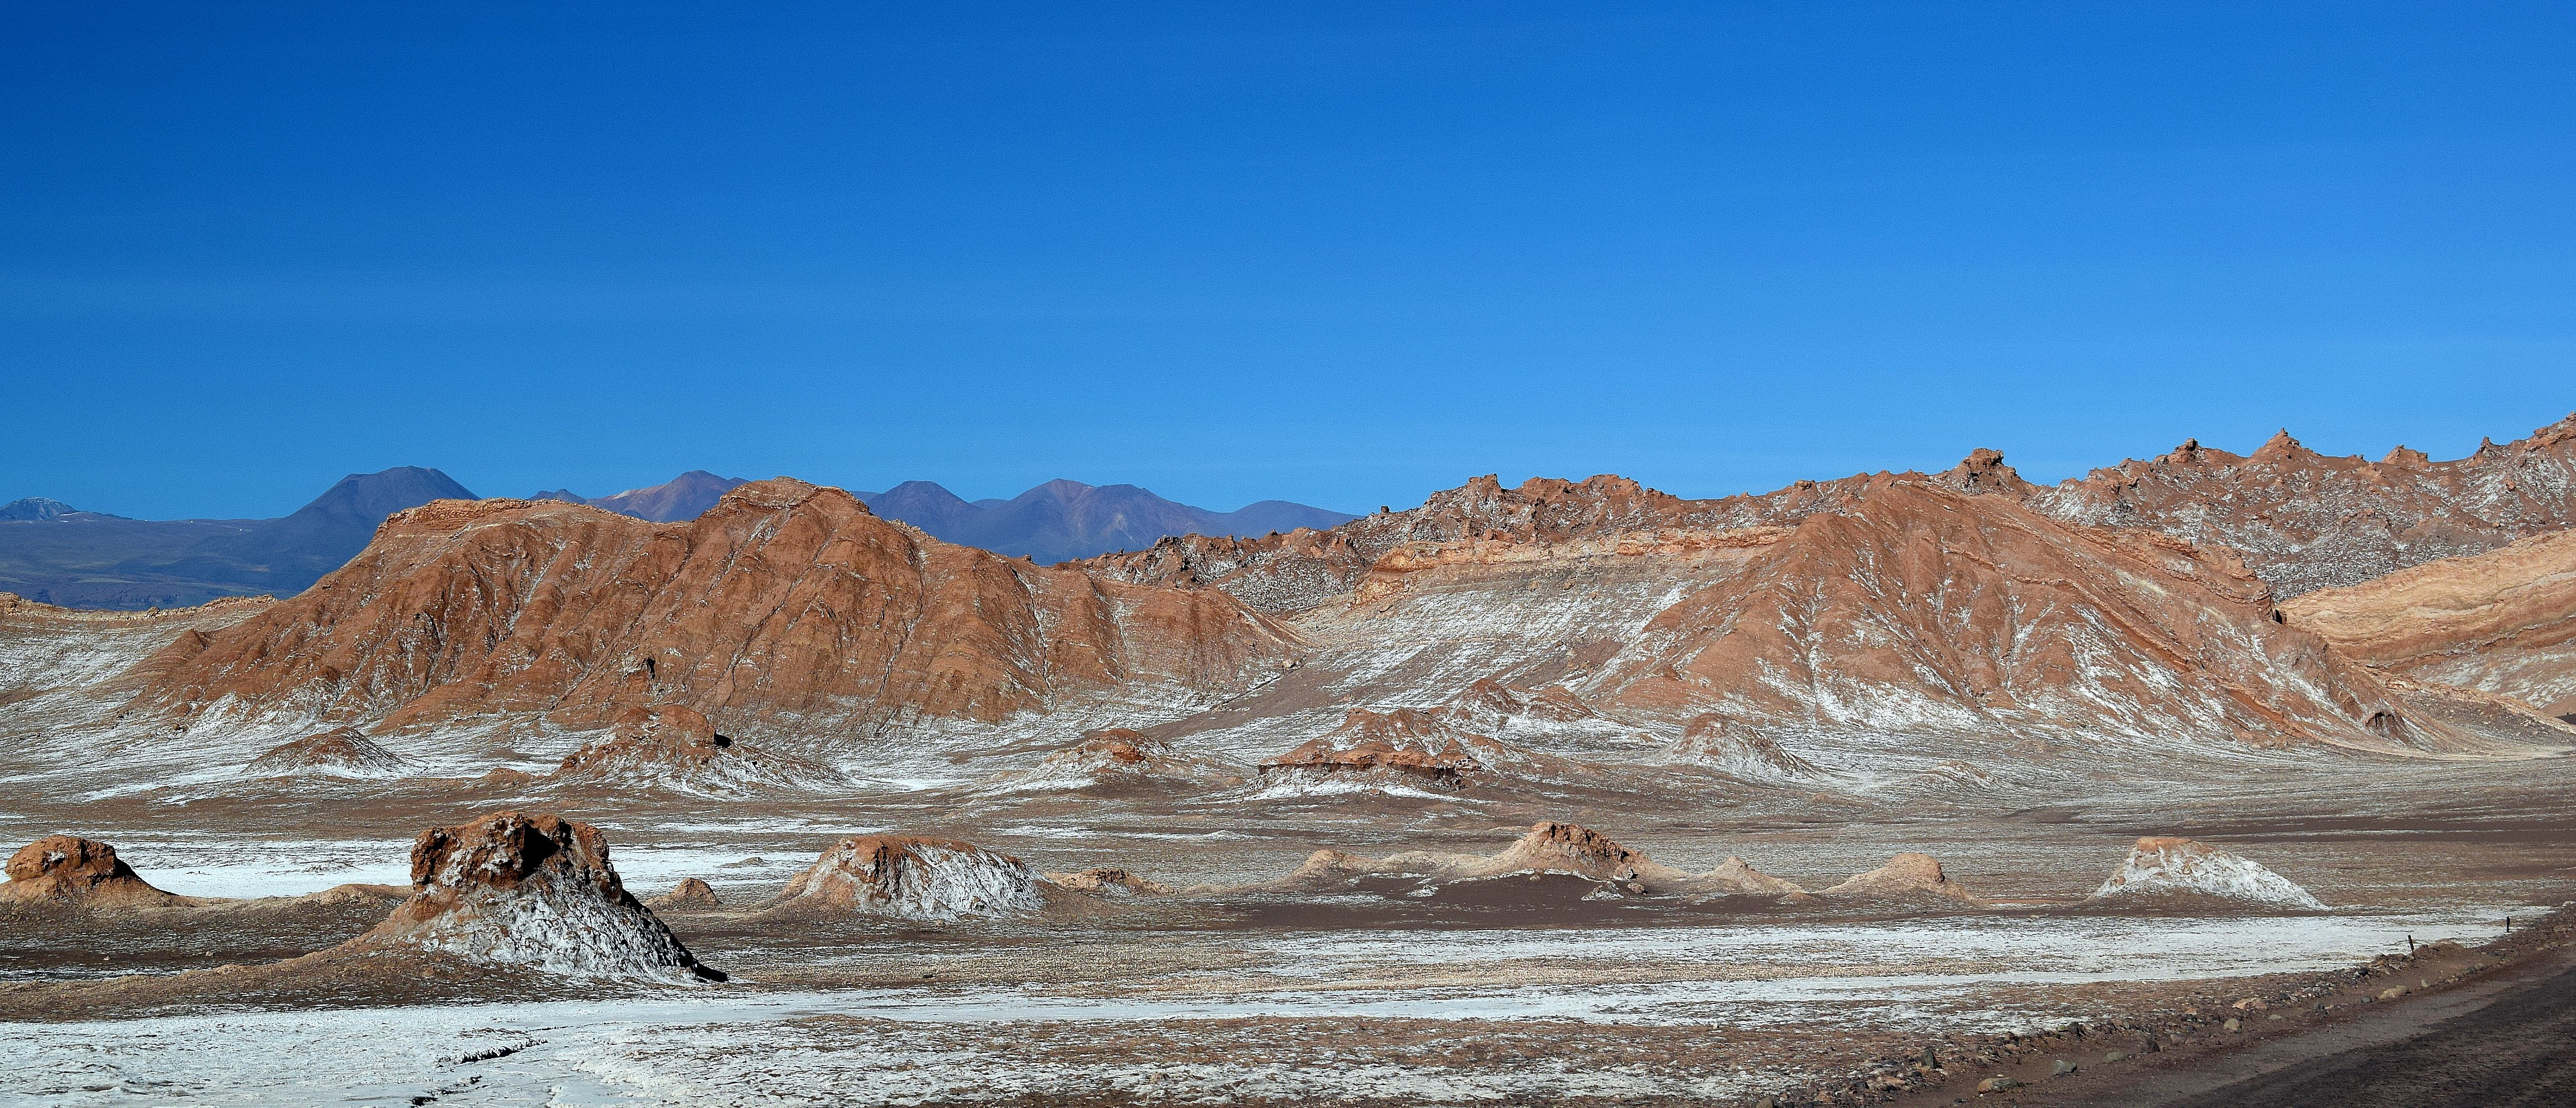 Valle de la Luna – Marsbéli táj az Atacama sivatagban